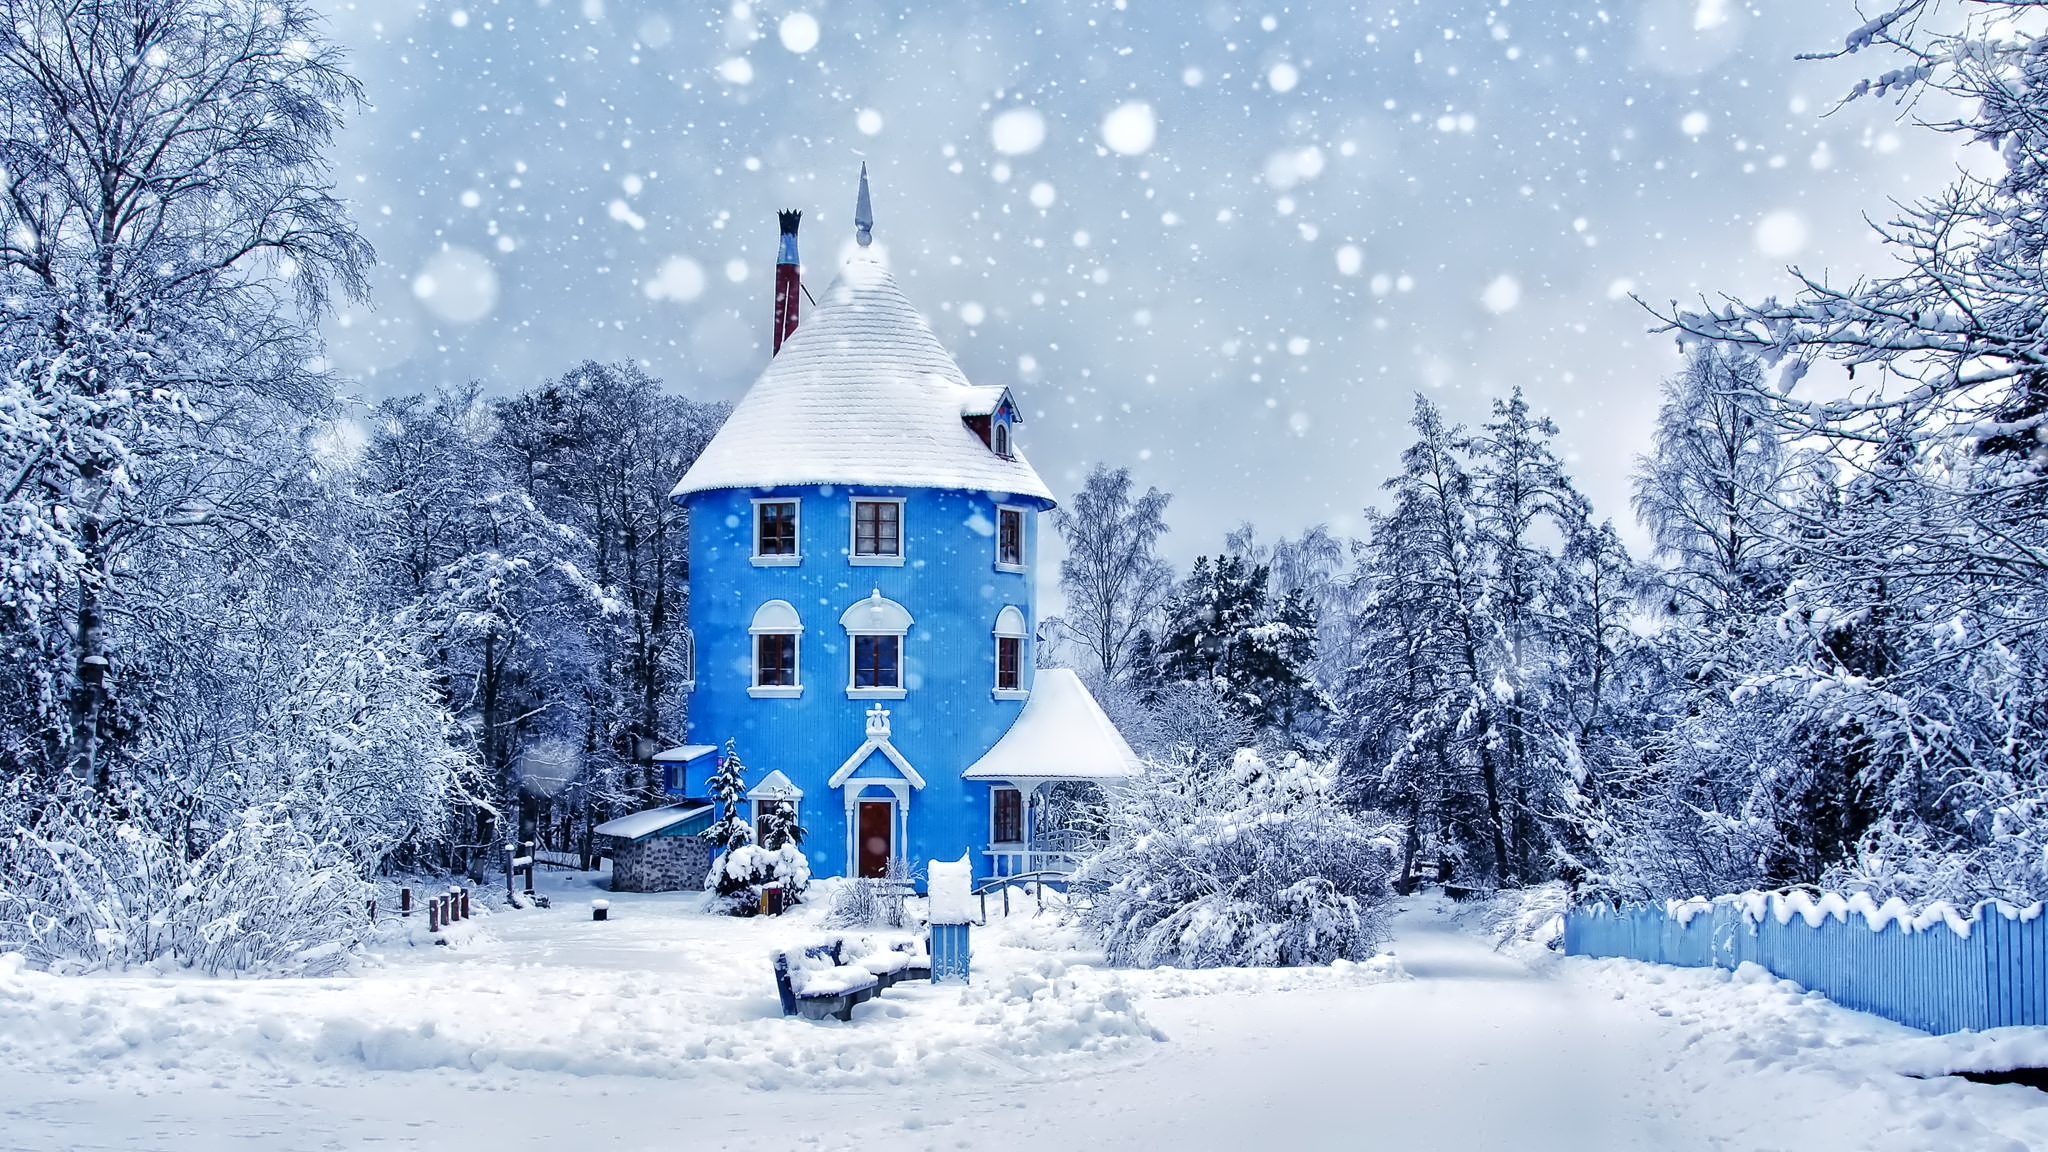 moomin world, finland, moominhouse, snowfall, man made, house, snow, theme park, winter Full HD